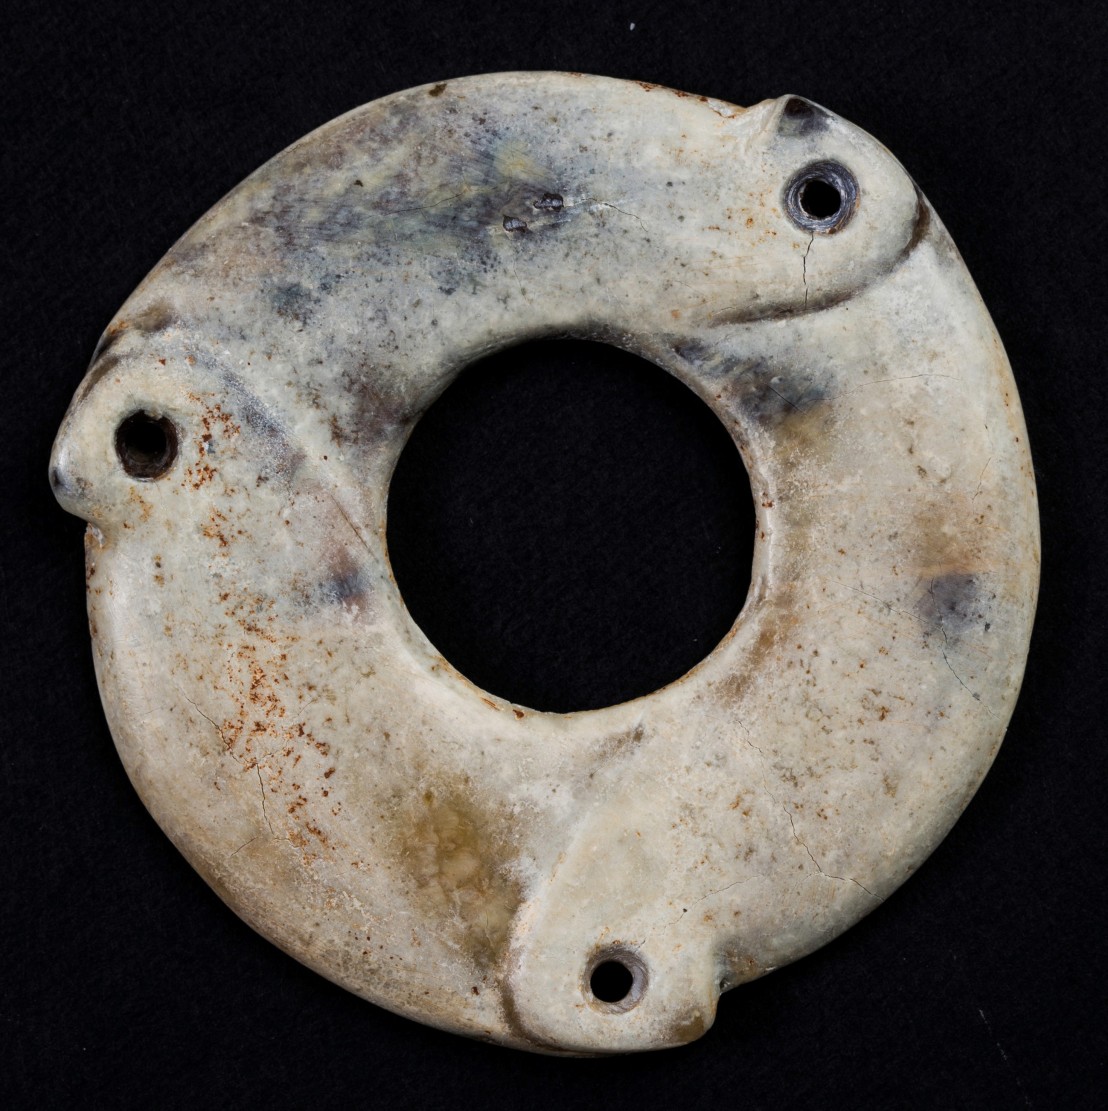 Liangzhu disc with cracks on the crust.